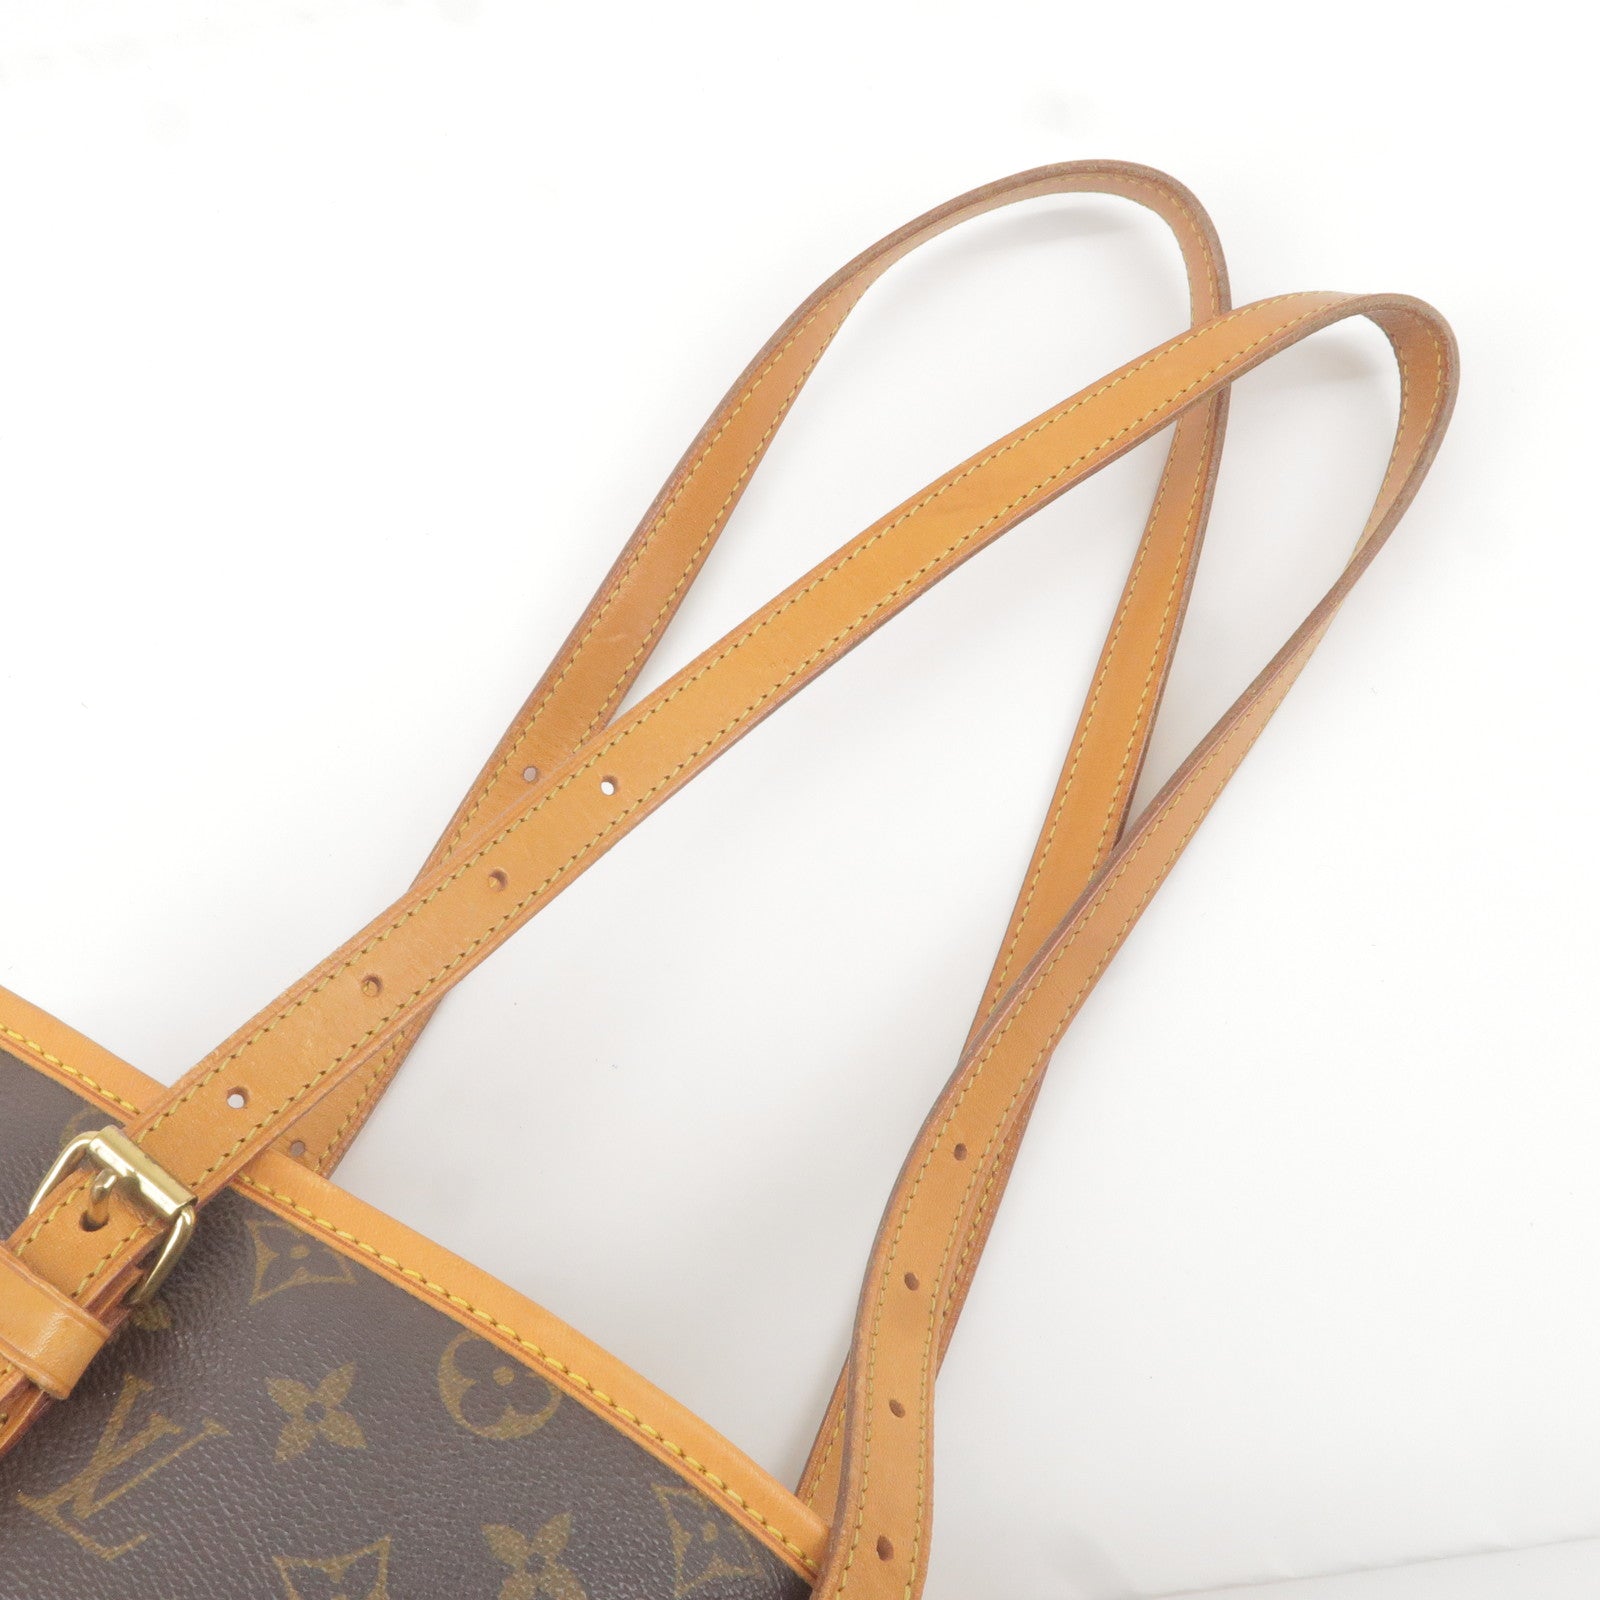 Louis Vuitton Speedy 40 cm handbag in brown monogram canvas and